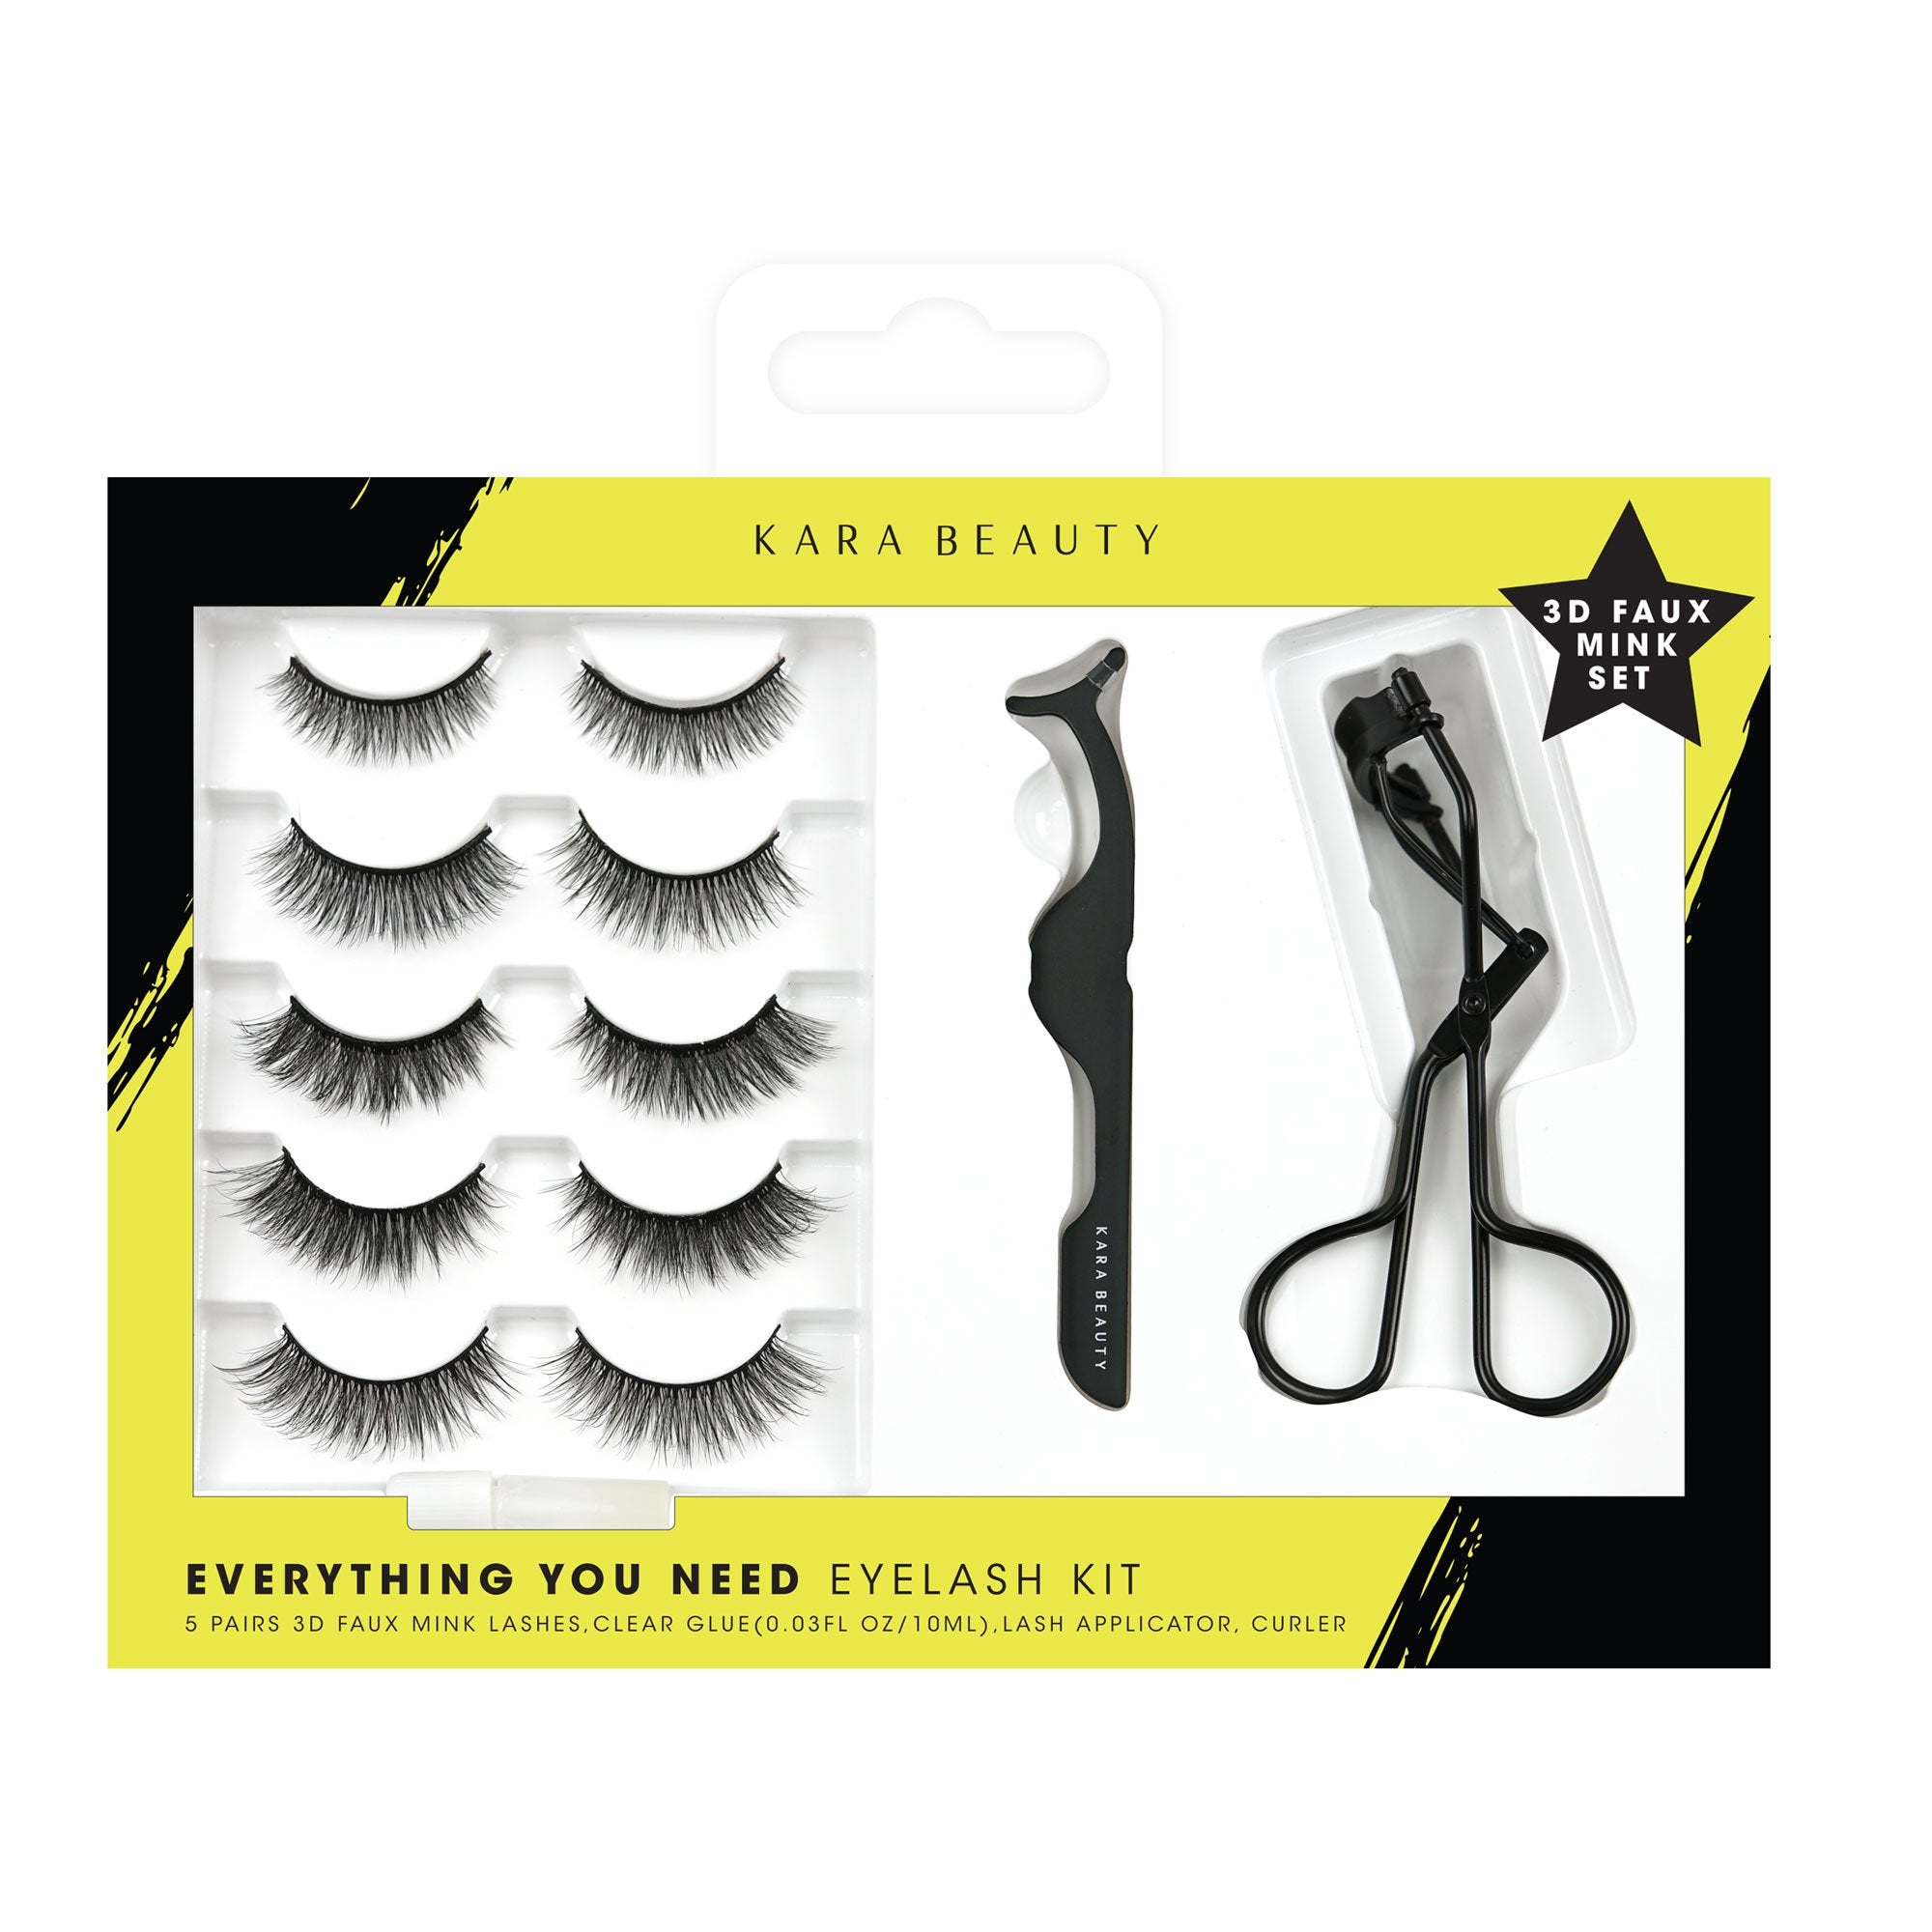 5 pair 3D faux mink eyelash kit with applicator and eyelash curler